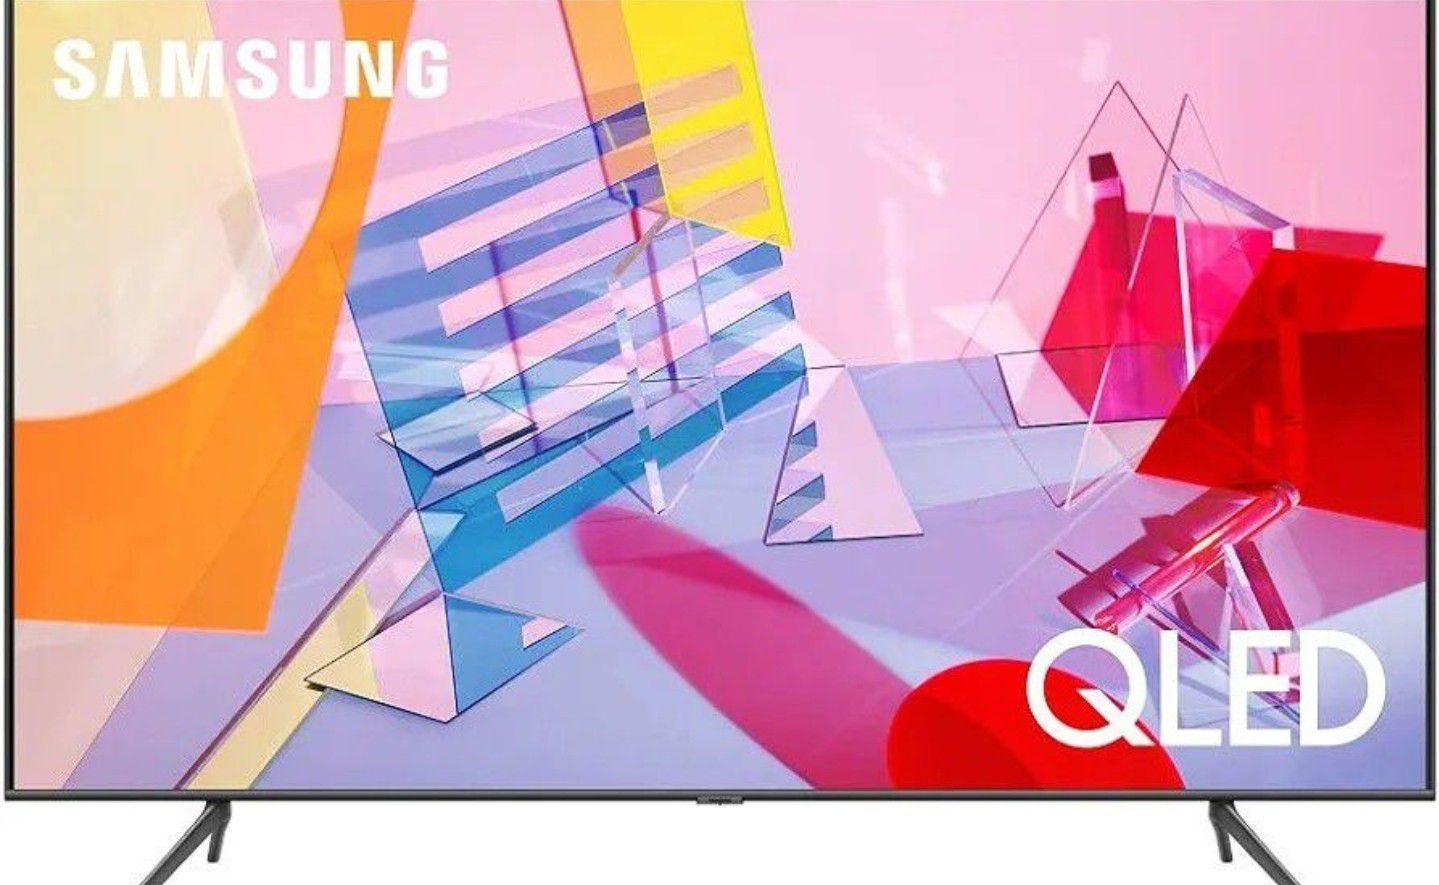 SAMSUNG 50-inch Class QLED Q60T Series - 4K UHD Dual LED Quantum HDR Smart TV with Alexa Built-in (QN50Q60TAFXZA, 2020 Version